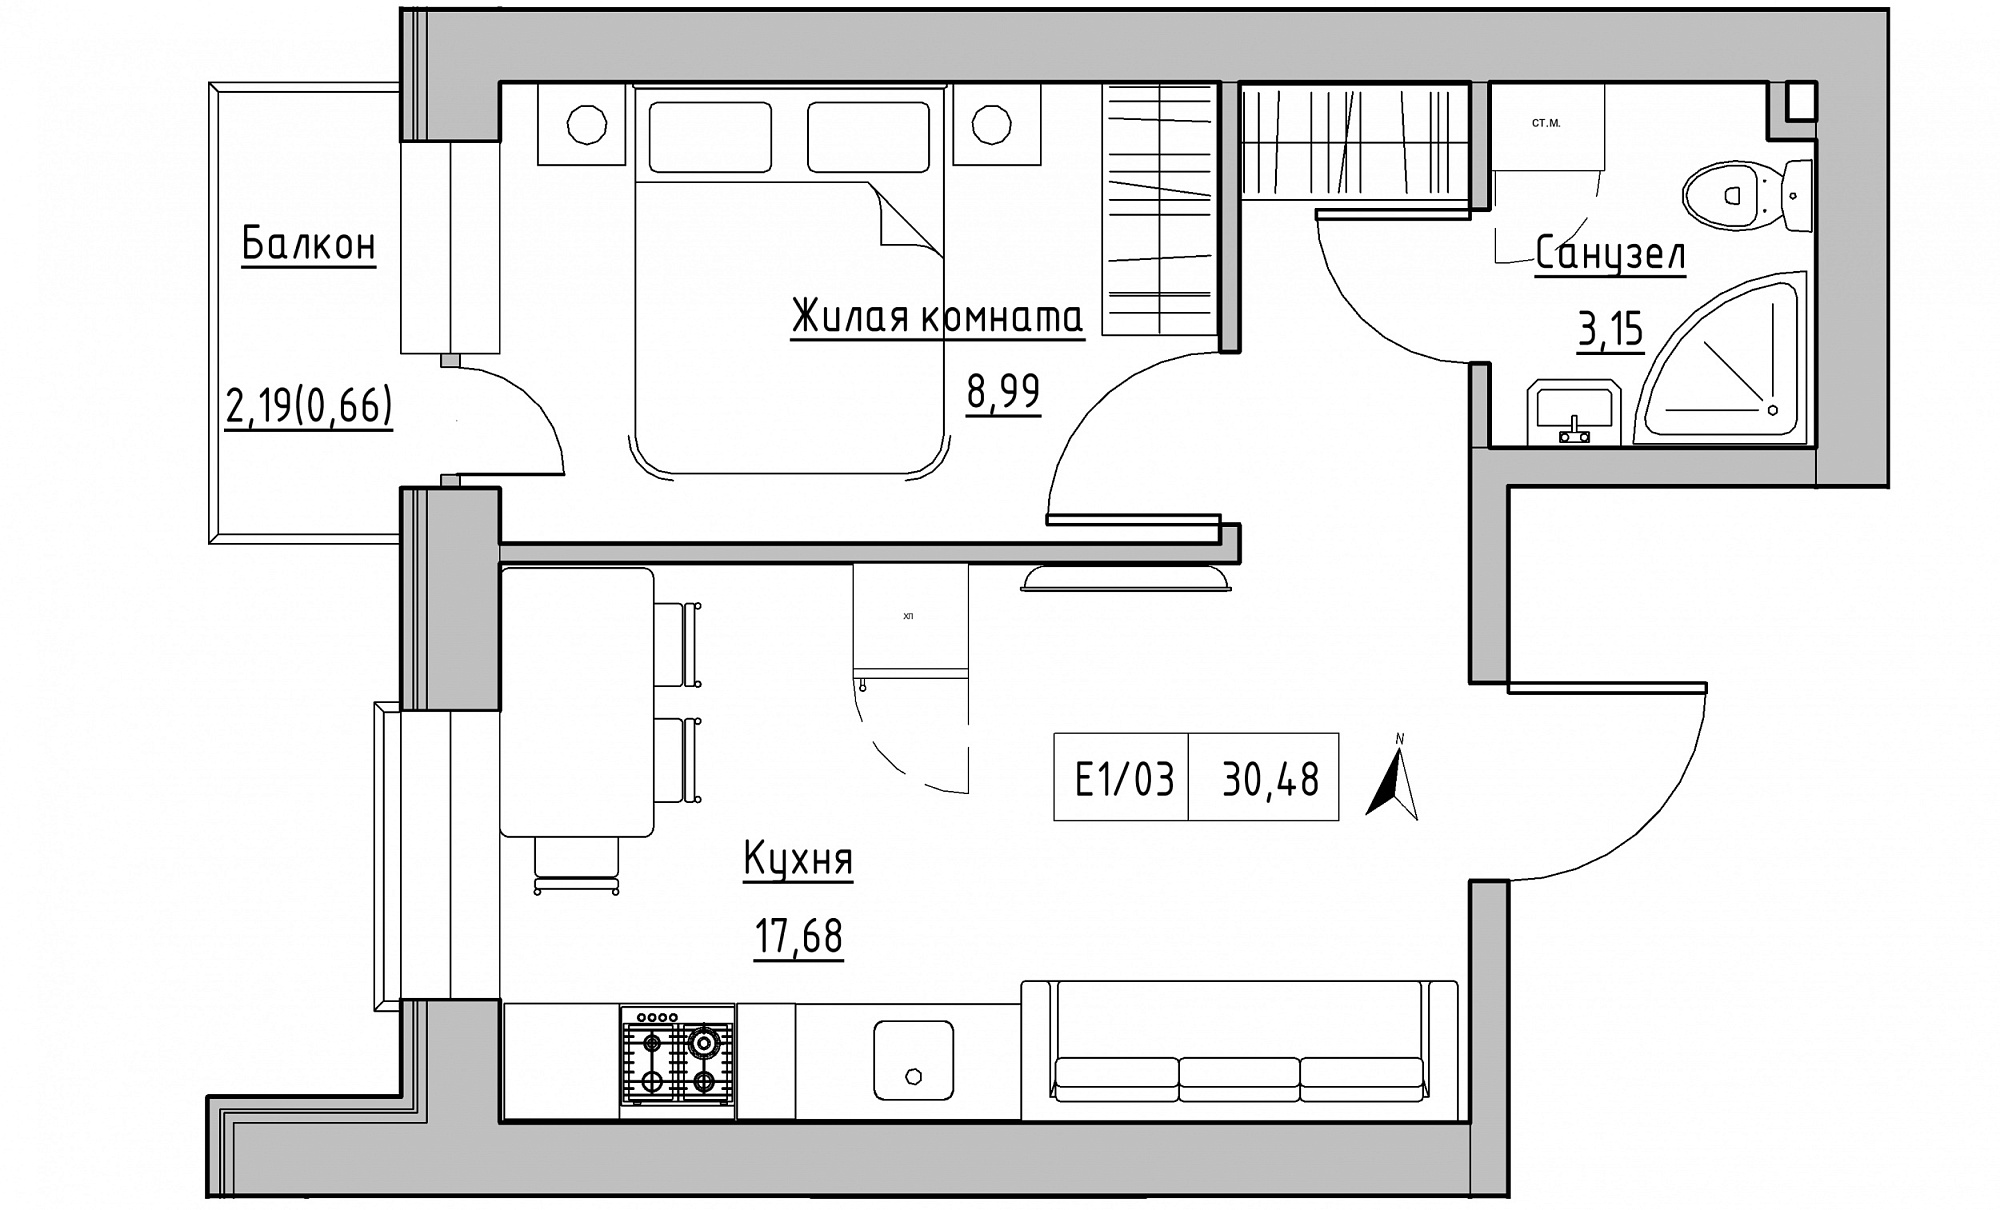 Planning 1-rm flats area 30.48m2, KS-015-04/0003.